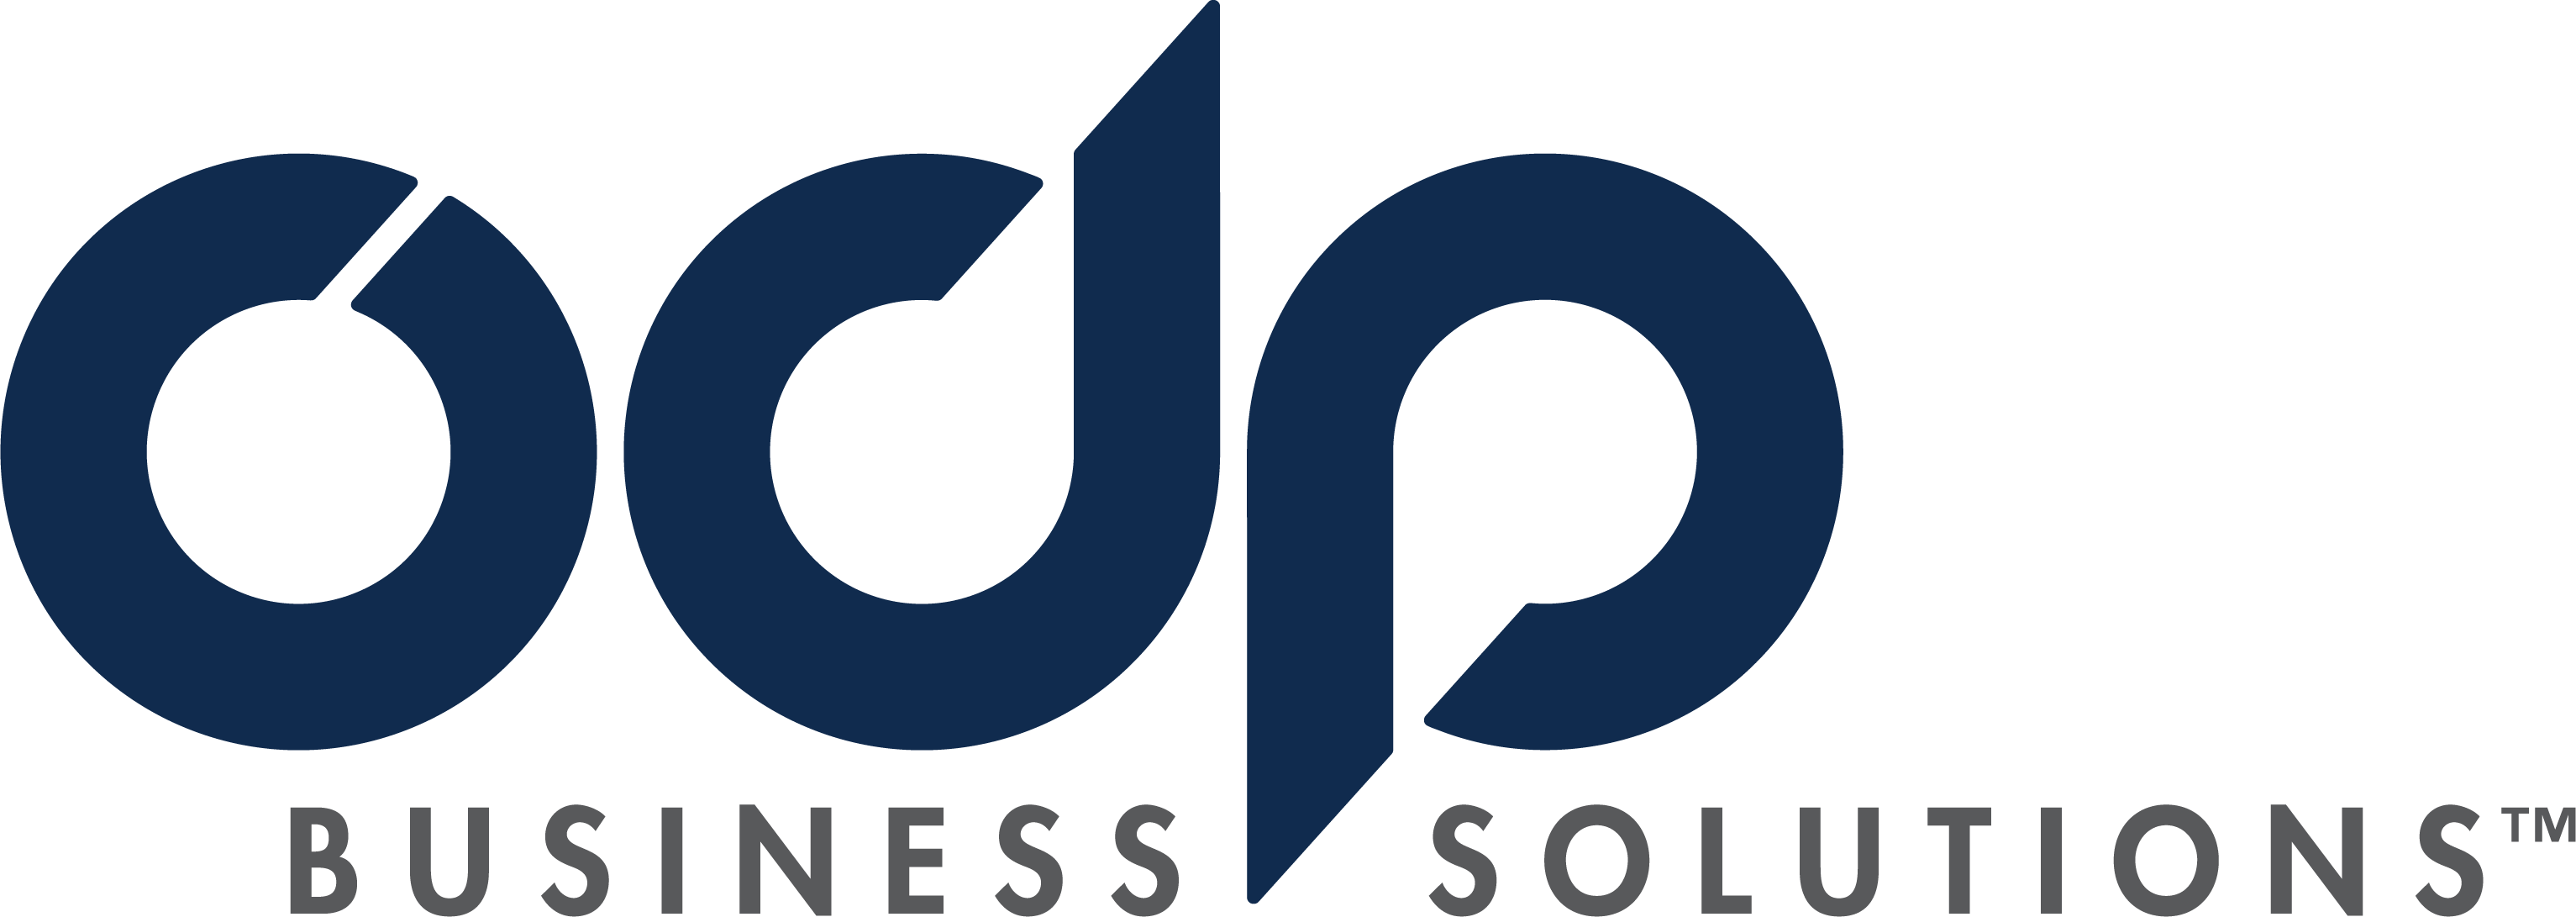 Office Depot Business Solutions Logo